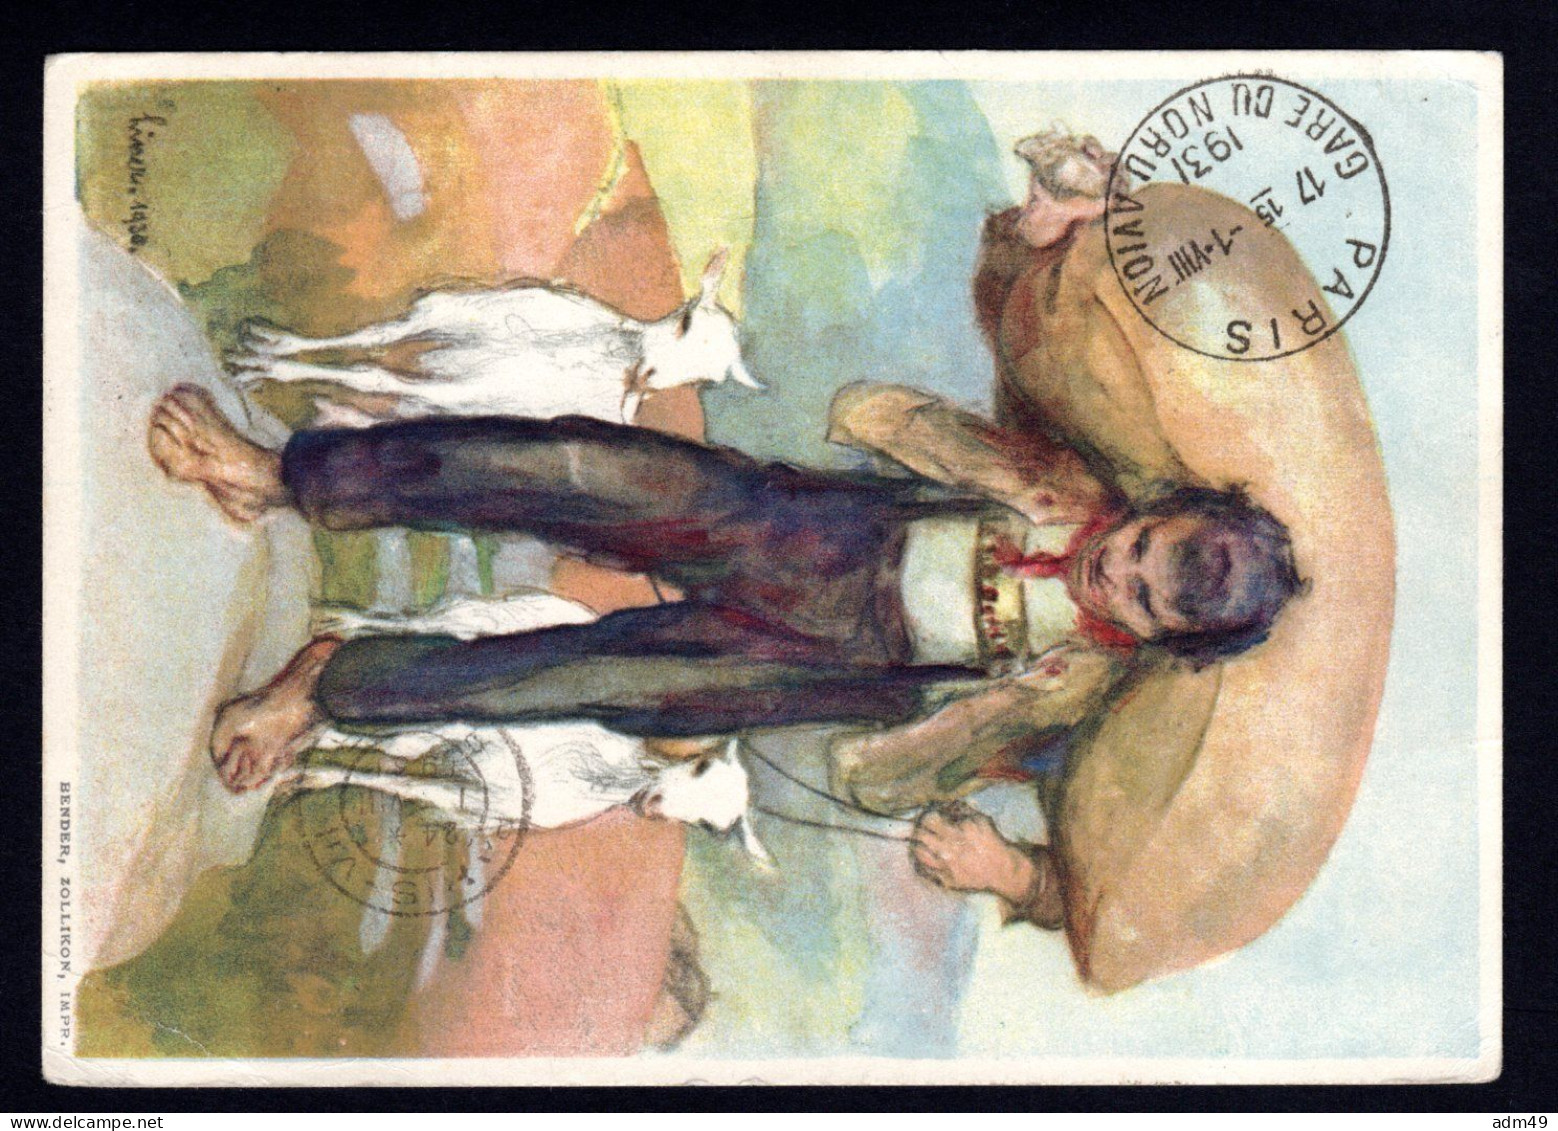 SCHWEIZ, Bundesfeierpostkarte 1931 Flugpost, Gestempelt - Brieven En Documenten